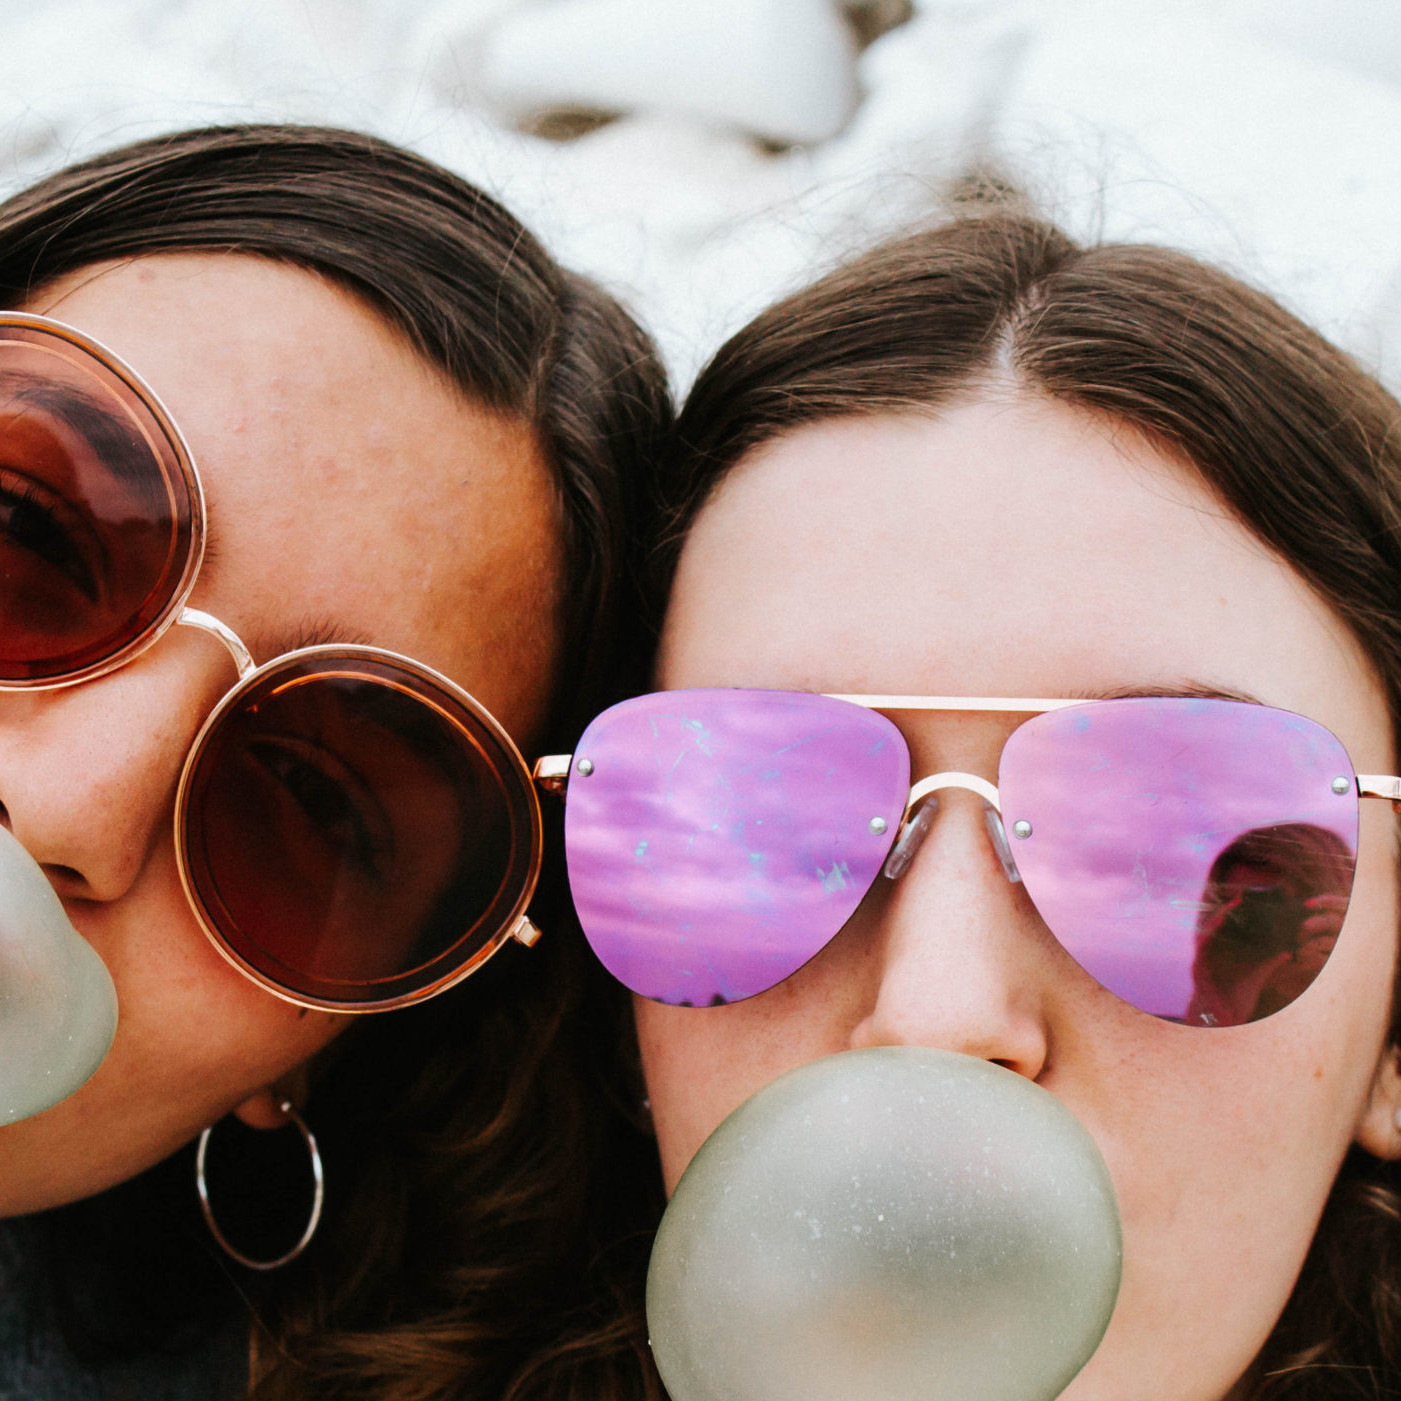 Two teen girls wearing sunglasses blow bubble gum bubbles.